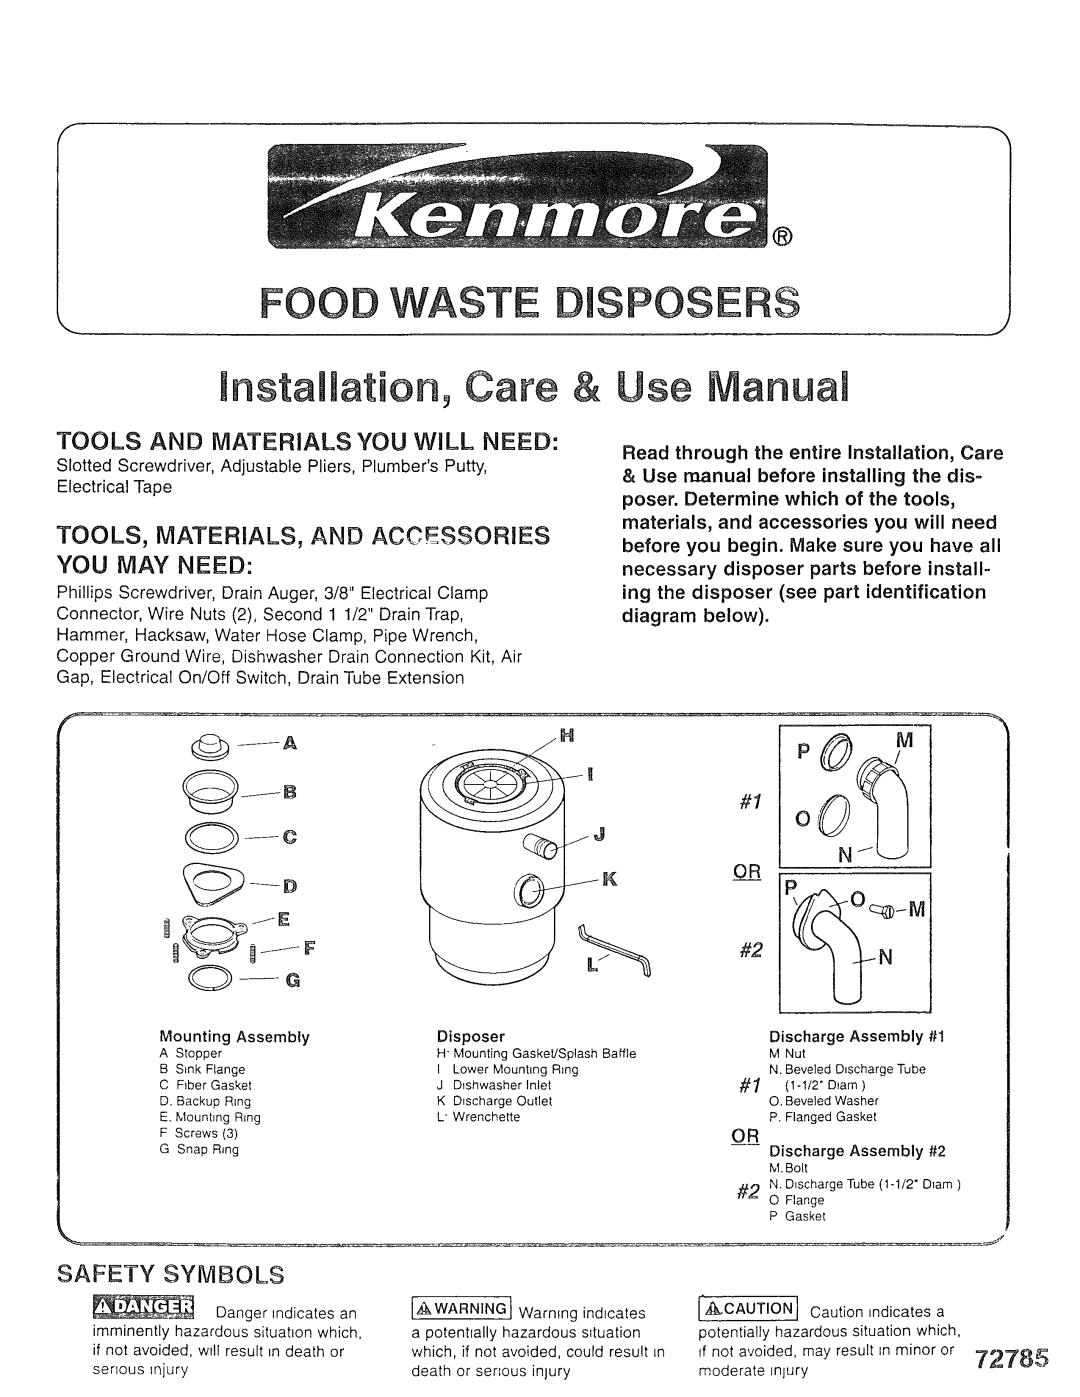 Kenmore 72785 manual Tools And Materials You Will Need, Tools, Materials, And Accessories You May Need, Safety Symbols 